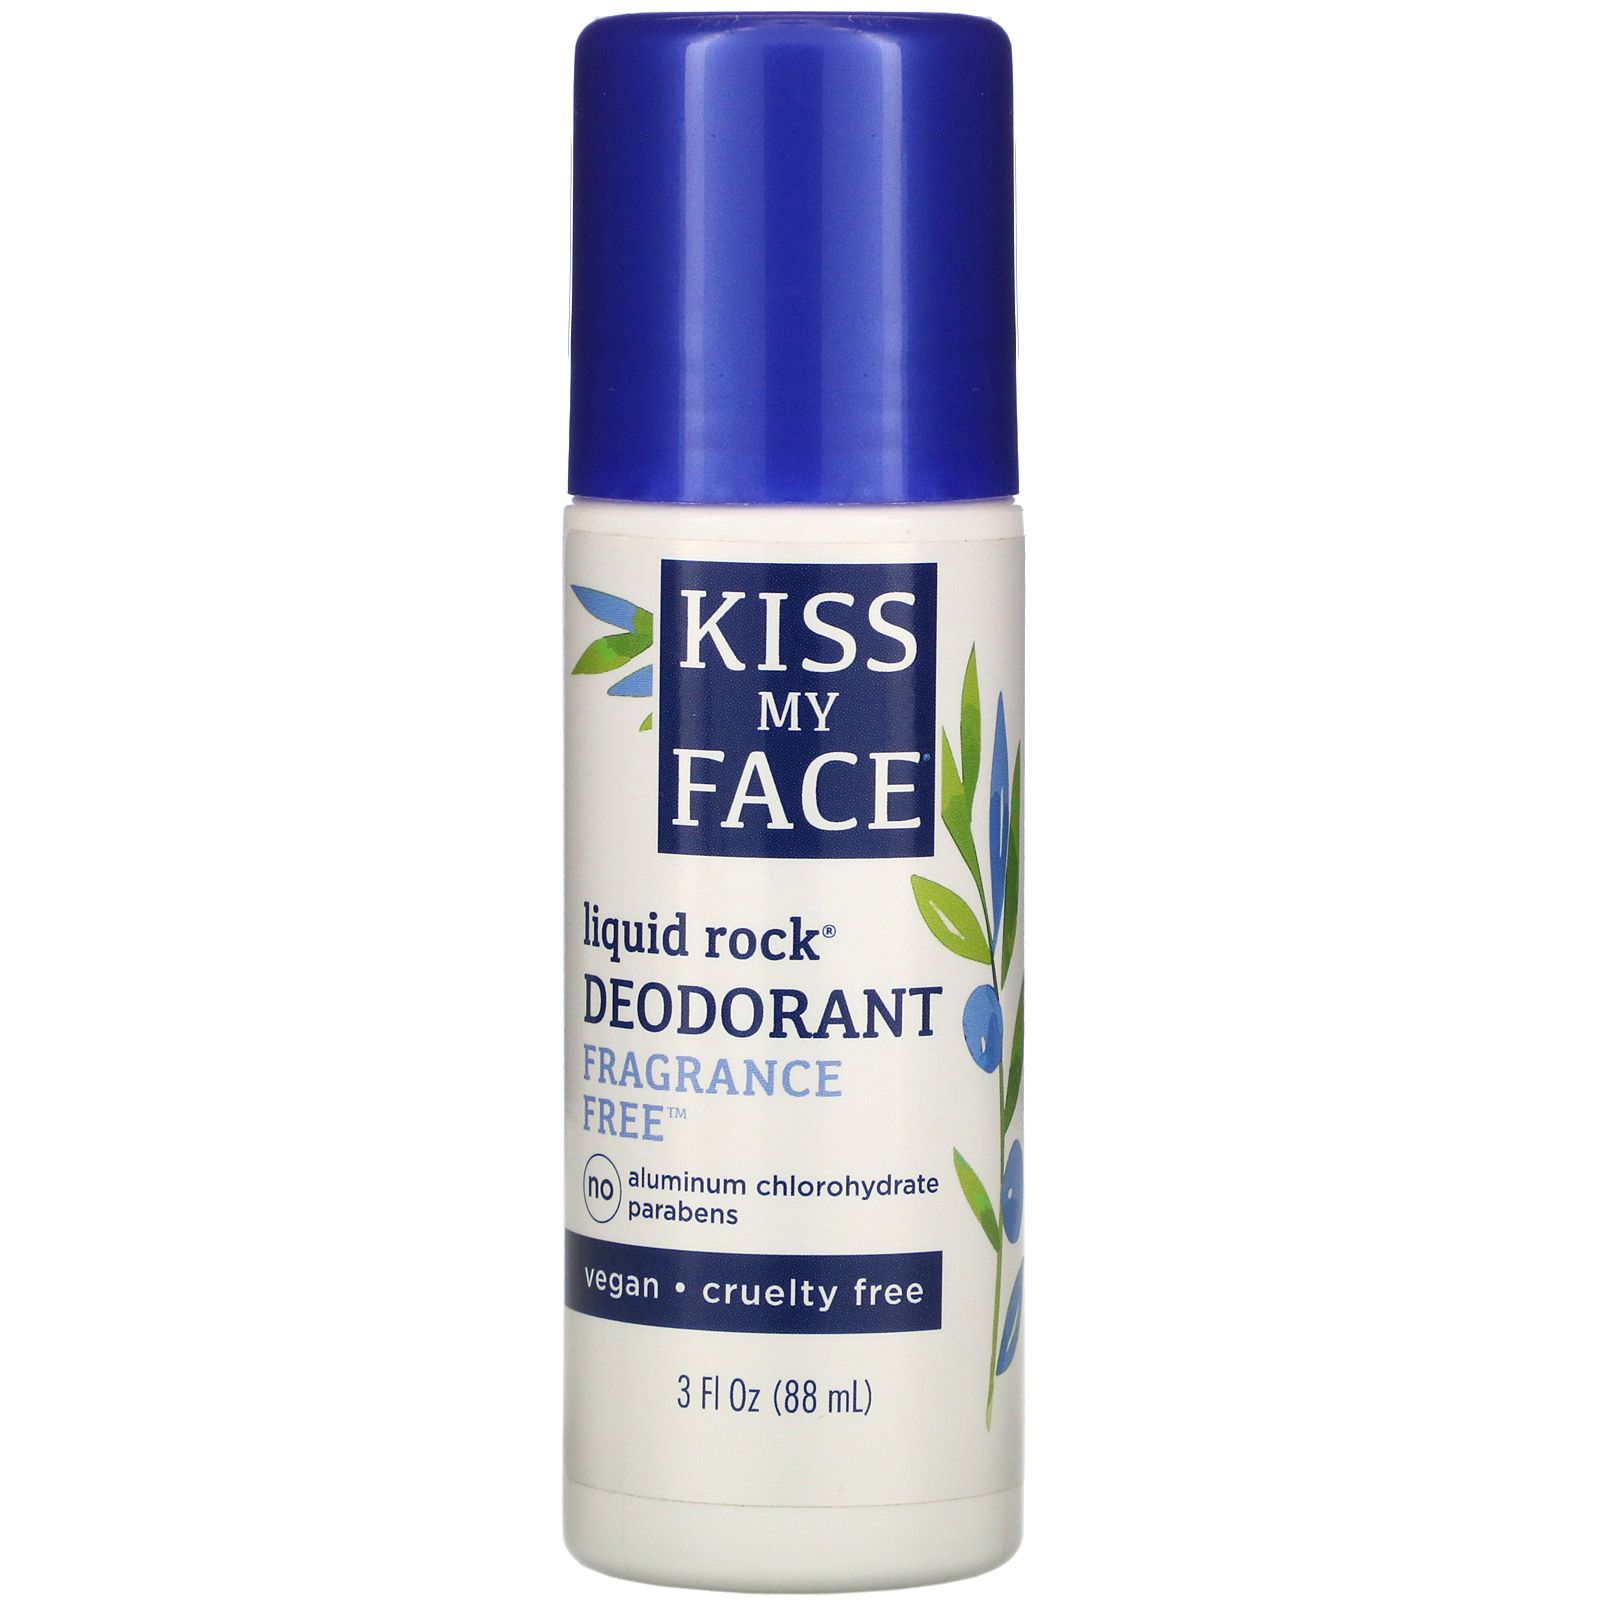 Kiss My Face Liquid Rock Deodorant Fragrance Free 3 fl oz (88 ml)